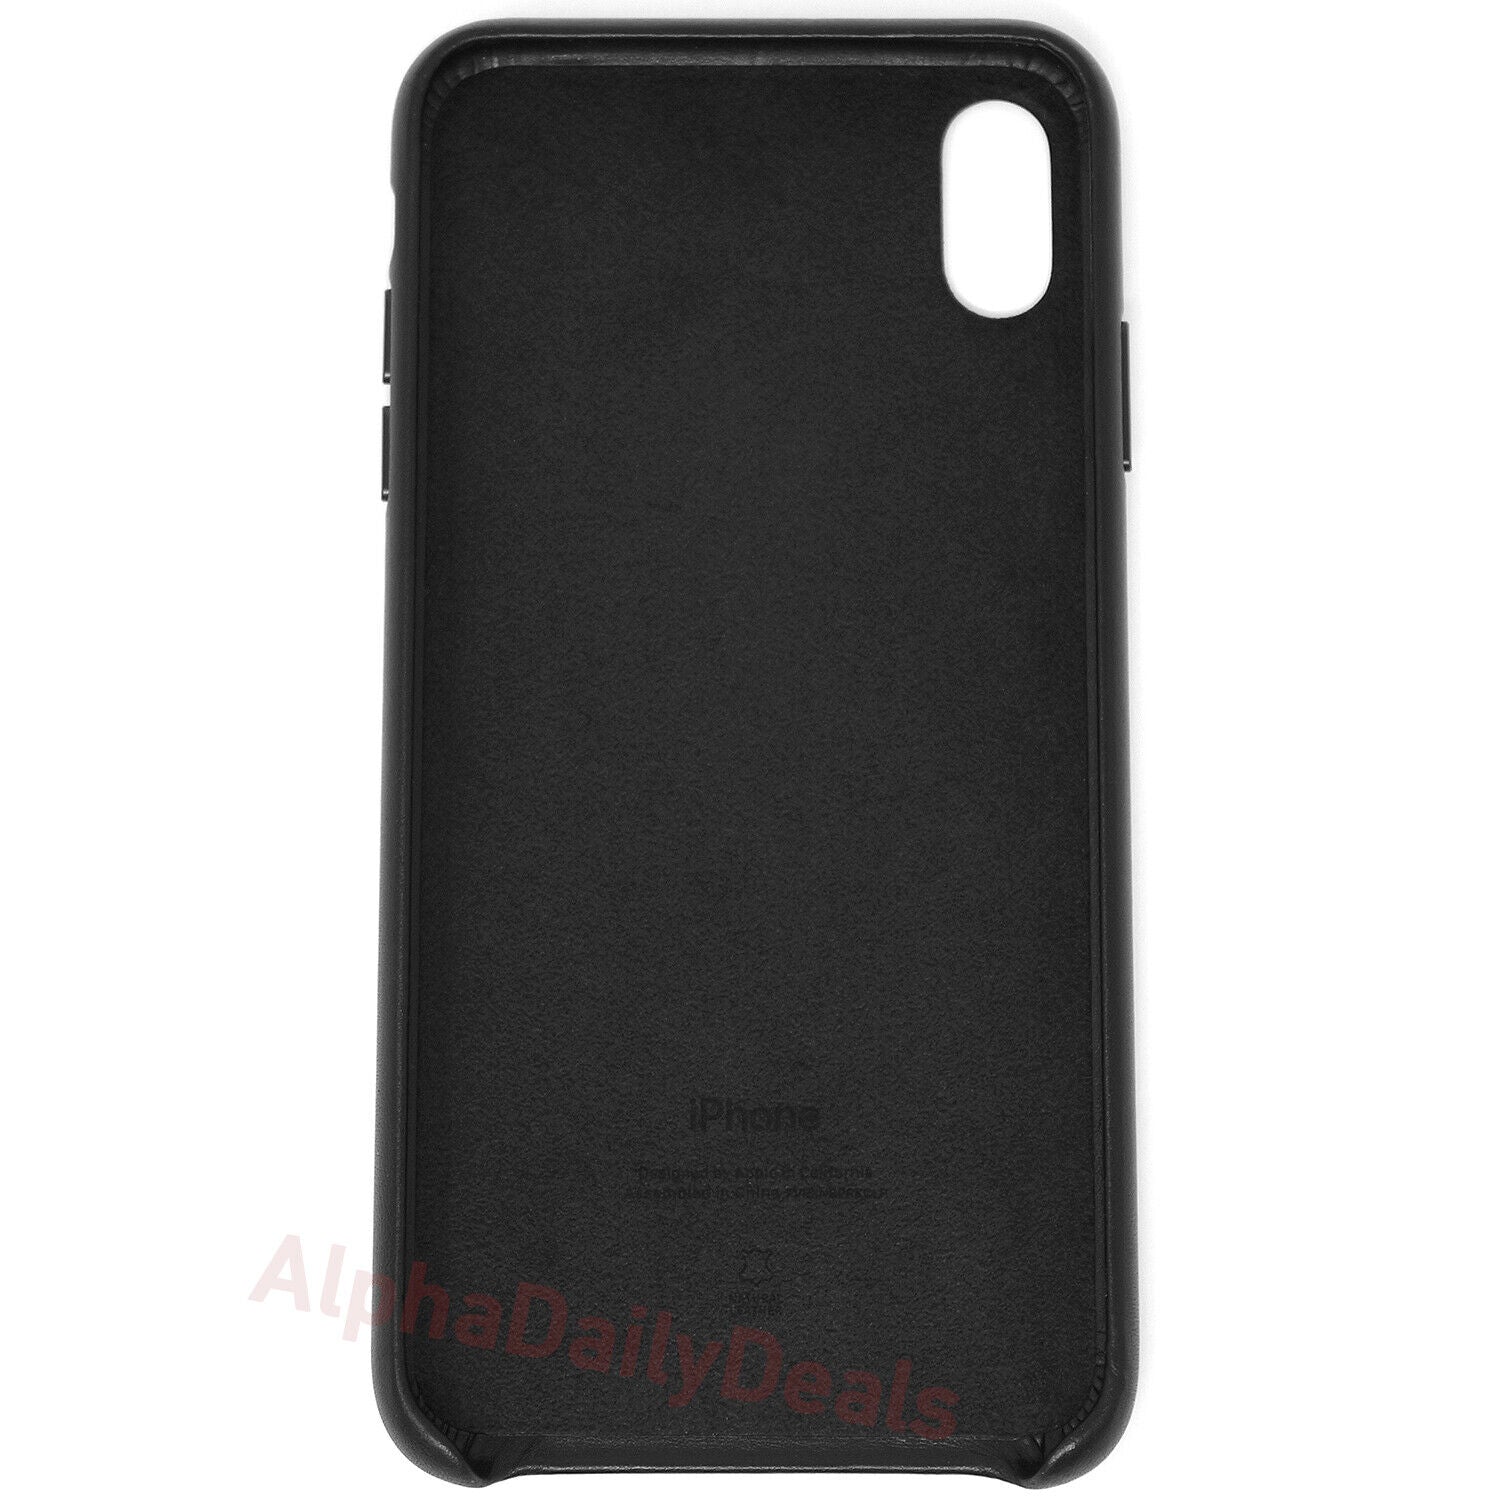 Genuine OEM Apple iPhone XS Max Black Leather Case